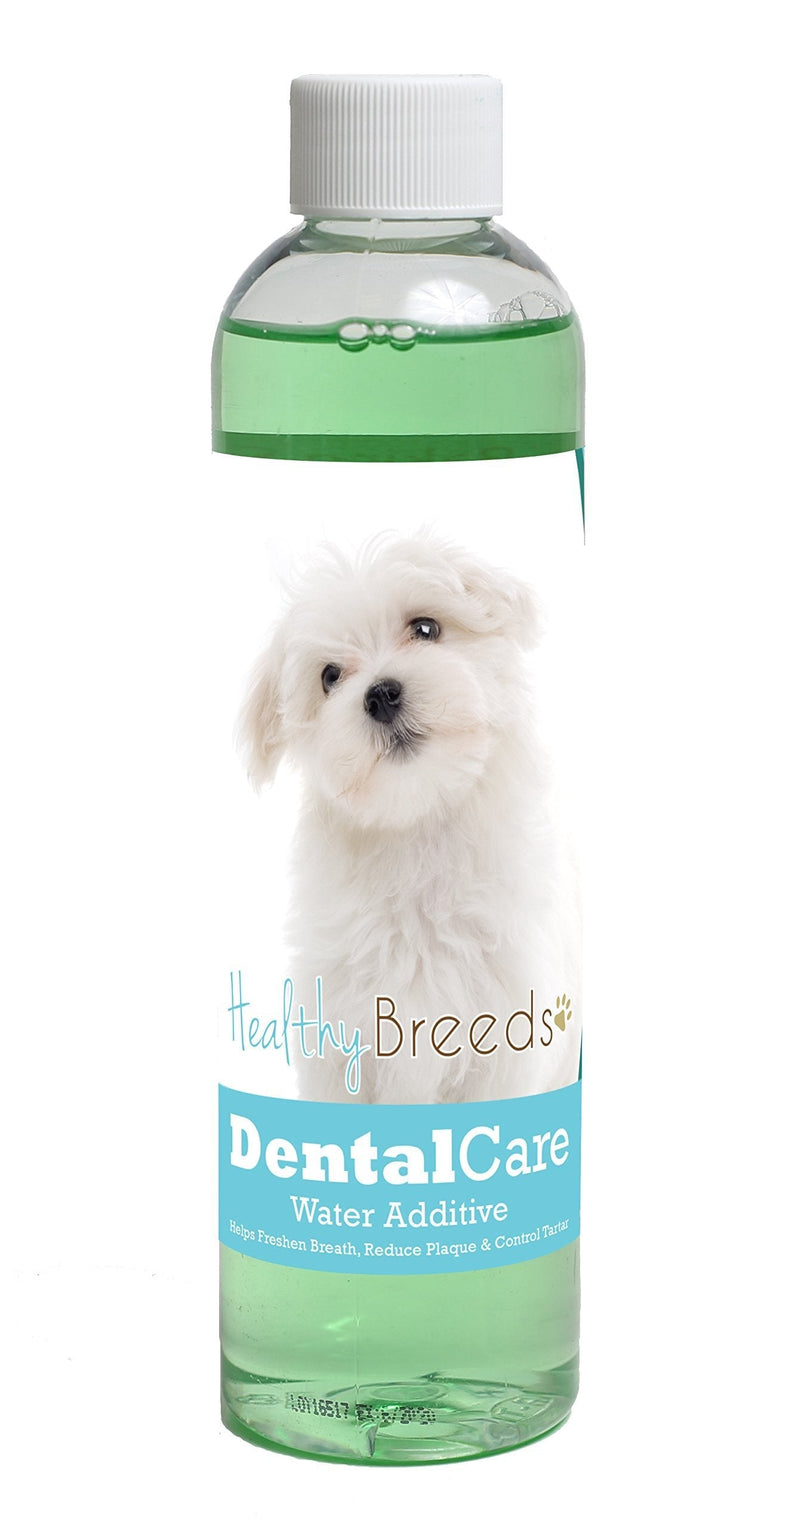 Healthy Breeds Dental Care Water Additive - Helps Freshen Breath, Reduce Plaque & Control Tartar - Veterinarian Formulated - Over 200 Breeds - Mint Flavor - 8 oz Maltese - PawsPlanet Australia